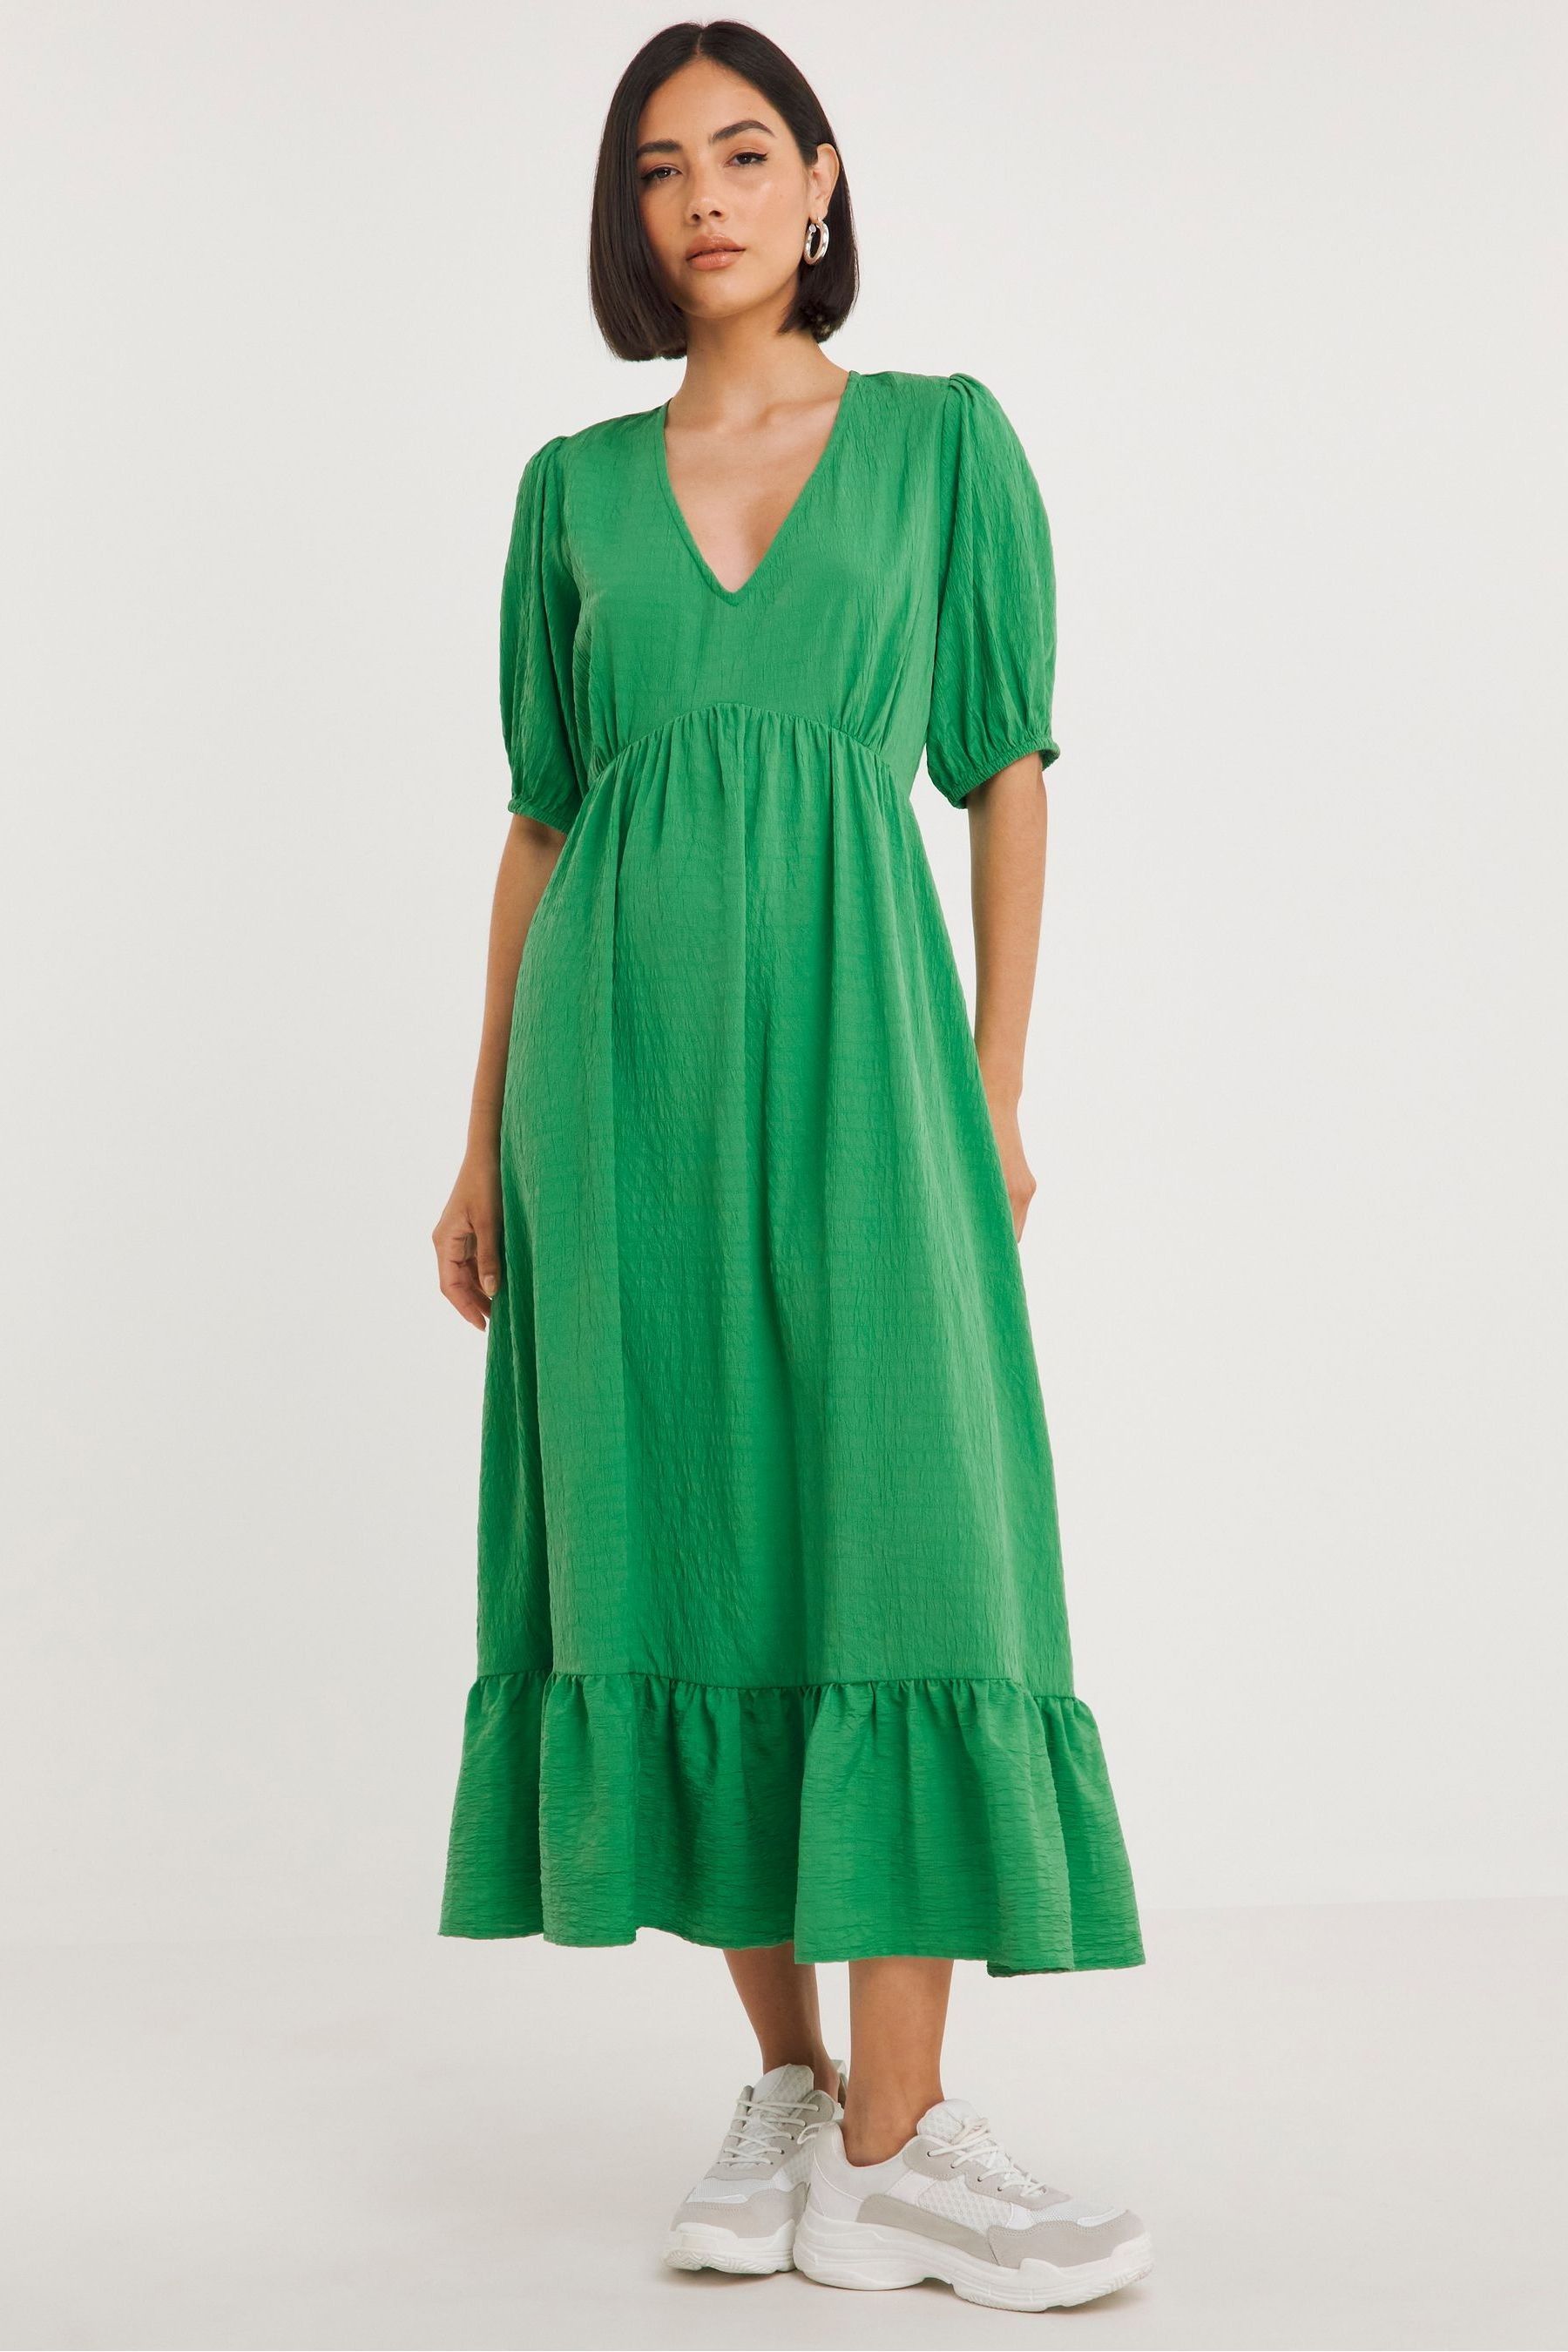 Buy Simply Be Green Textured Midi Dress from Next Australia